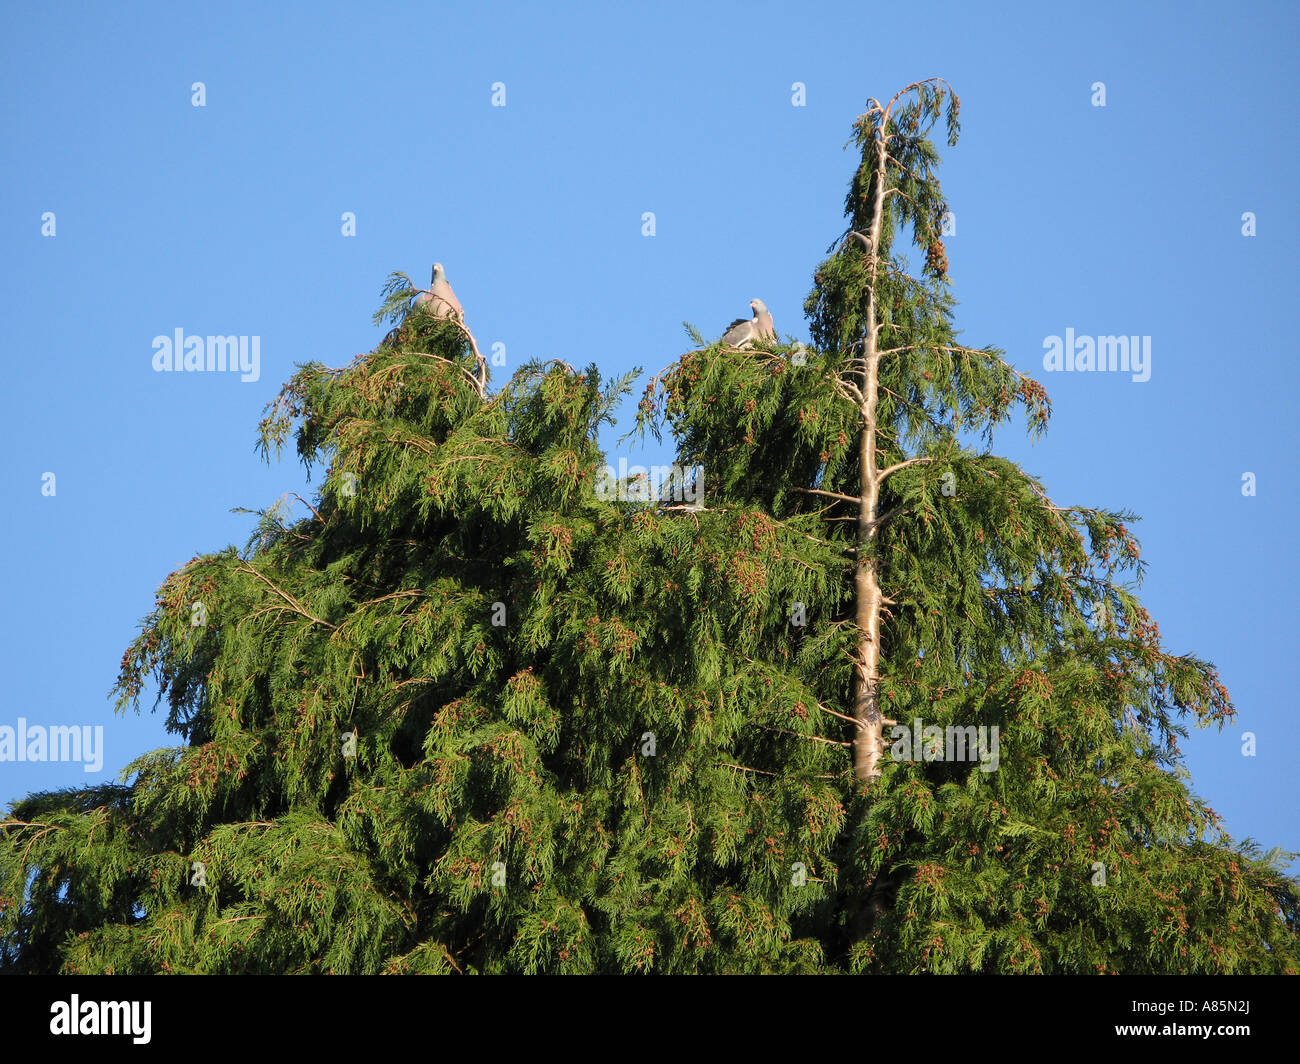 Leylandii Cypress conifer tree in suburban garden UK Stock Photo